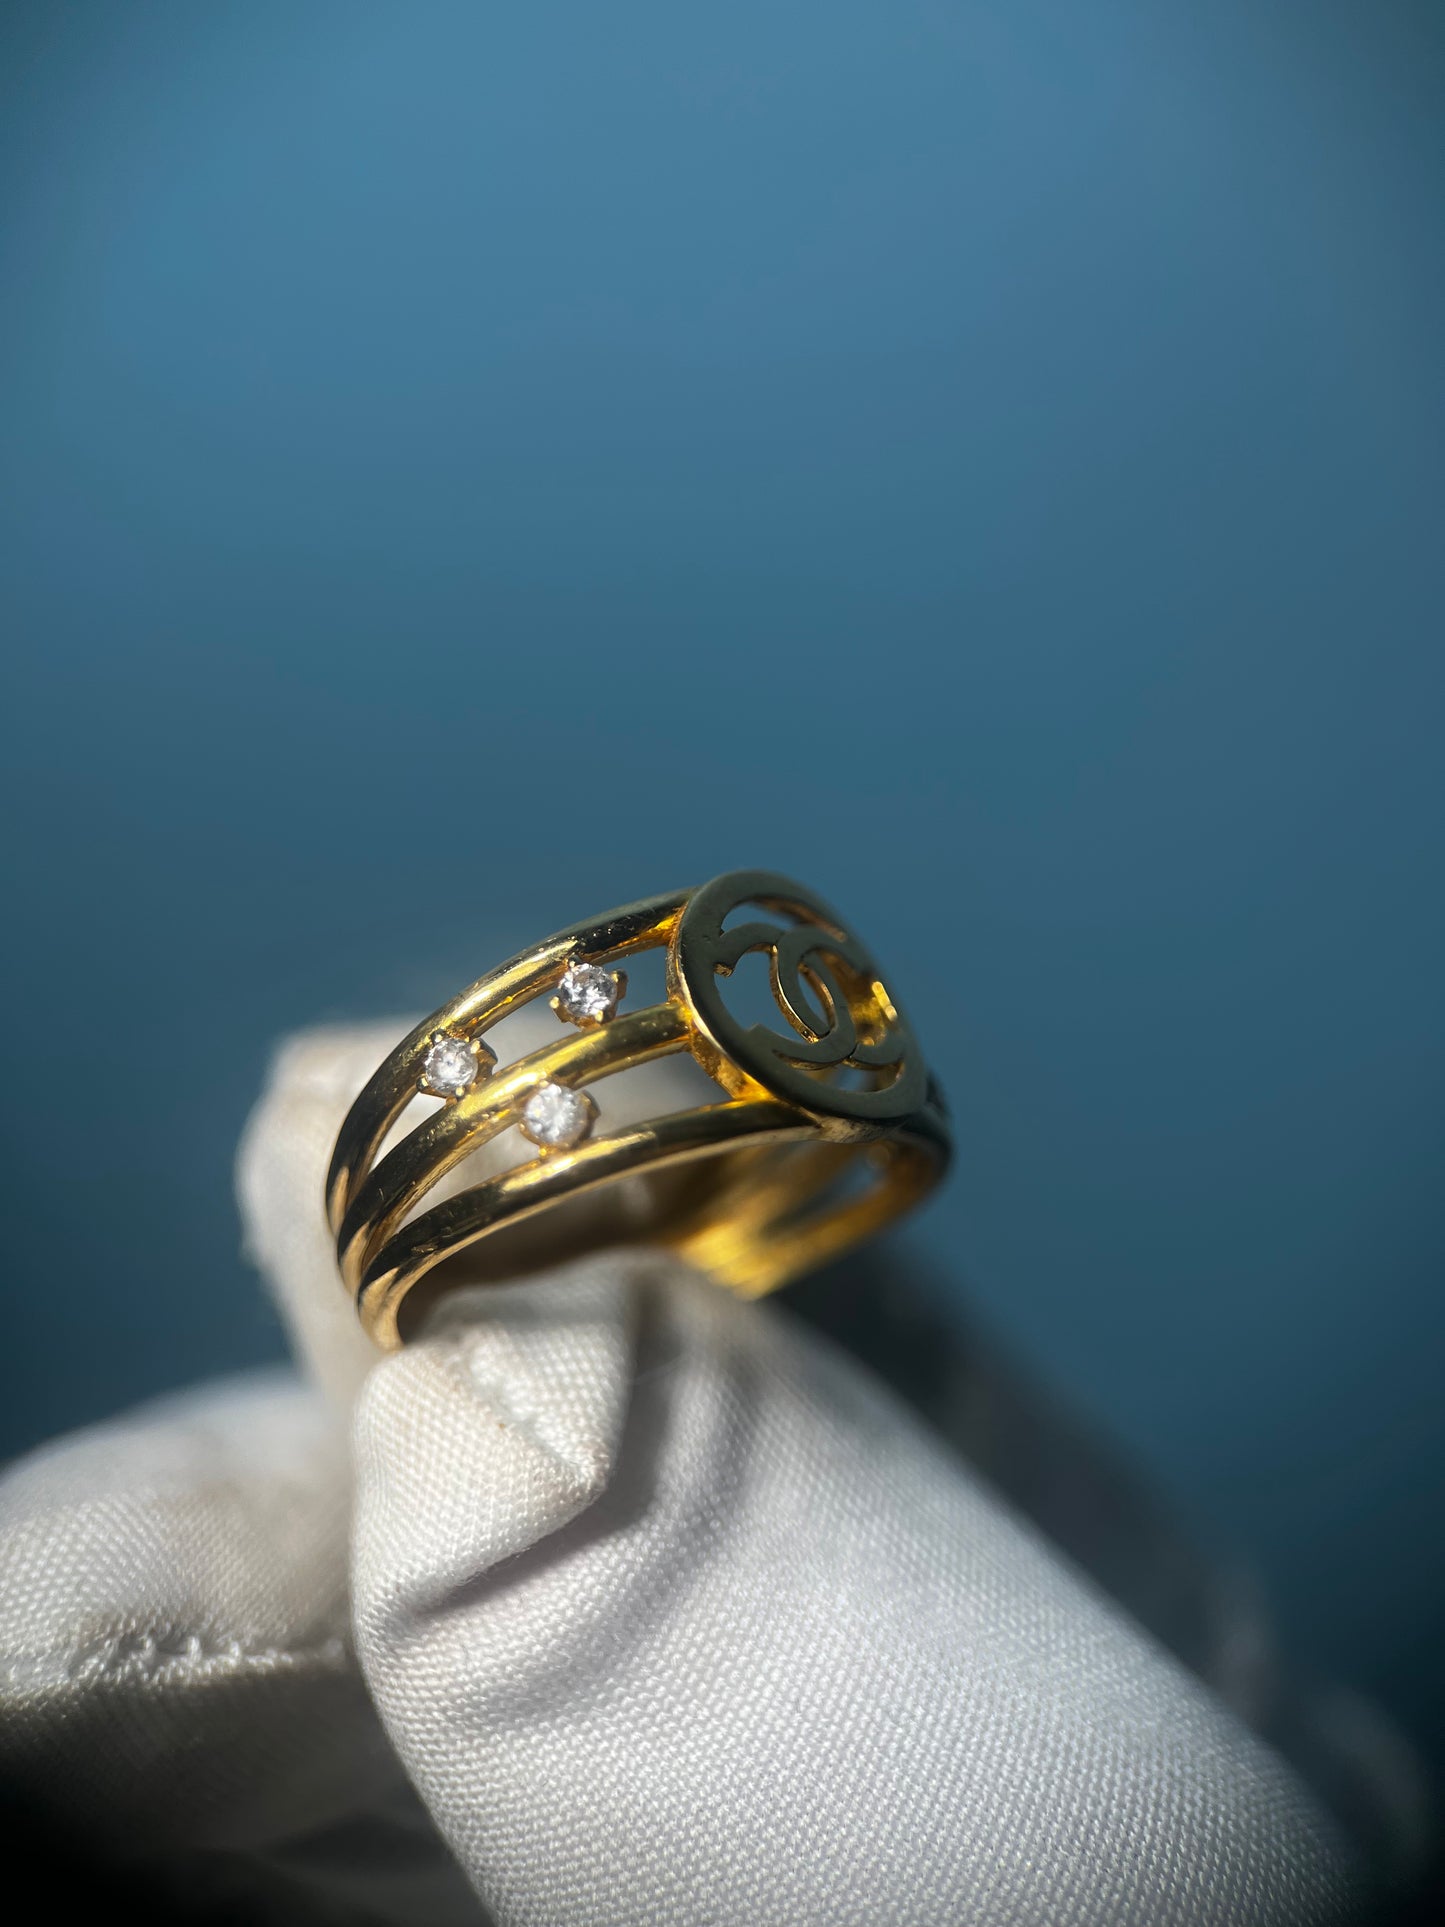 Designer Ring in 21k Yellow Gold